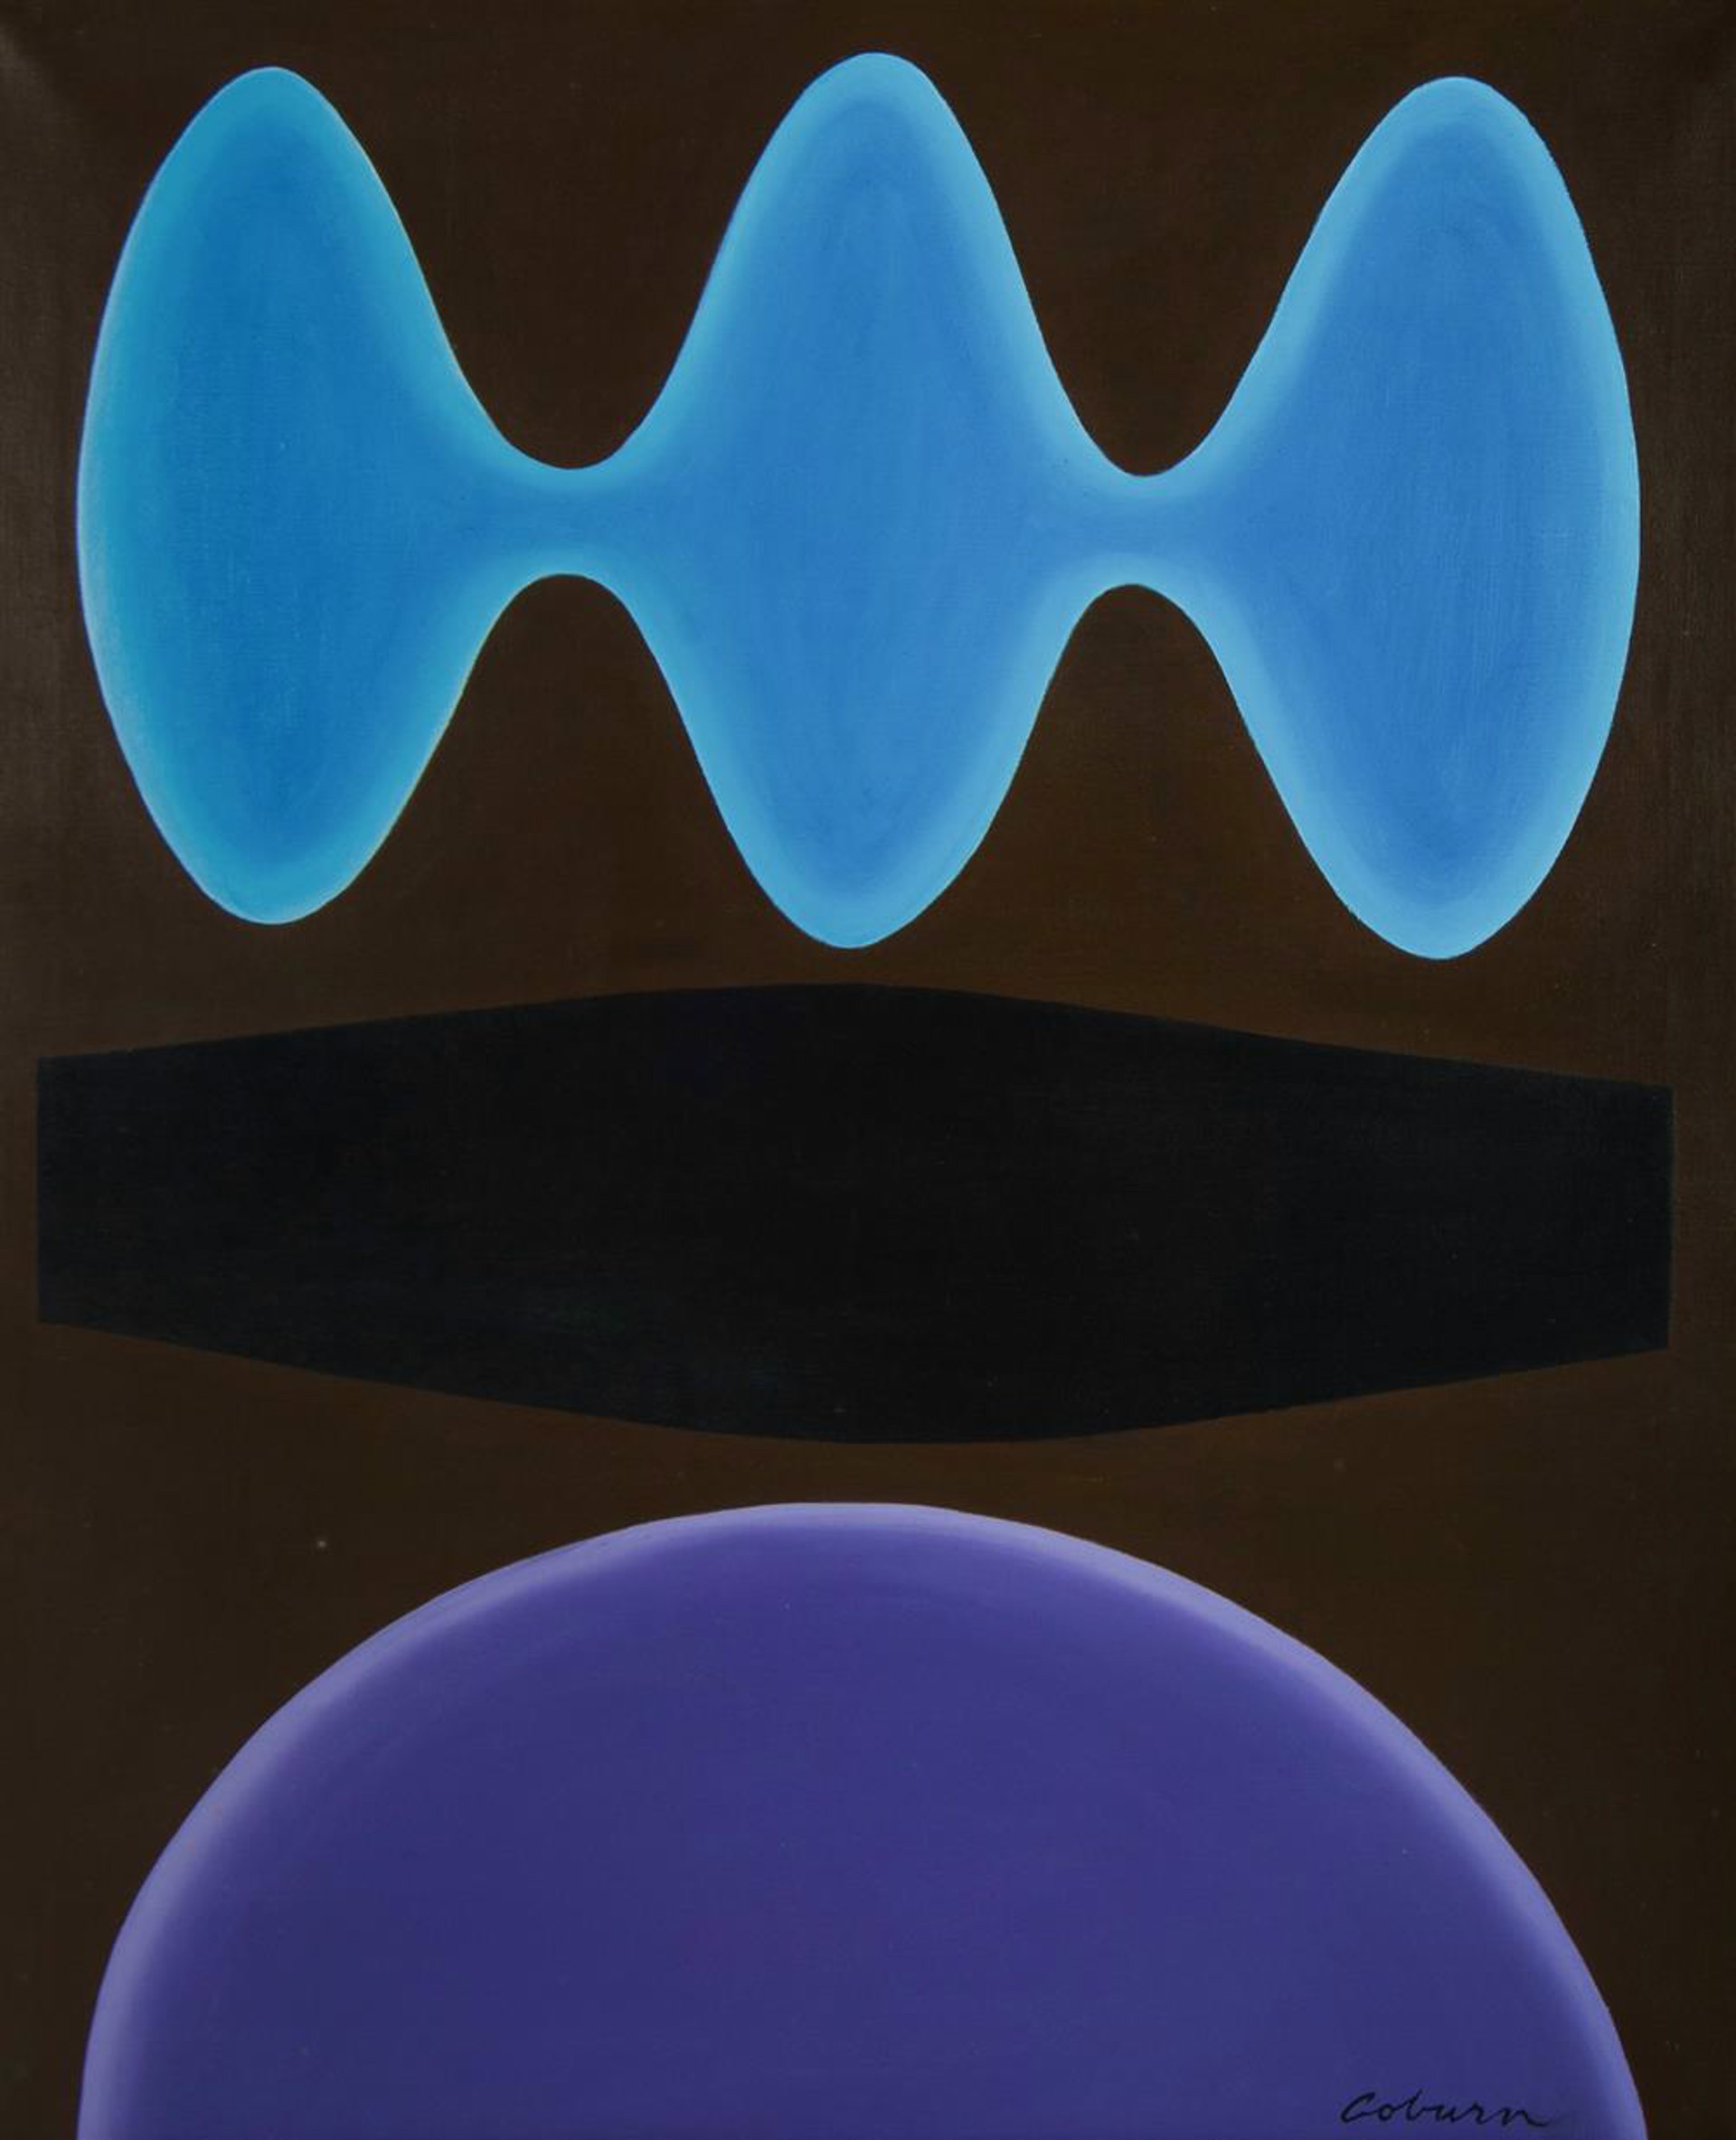 Blue Vibrations by John Coburn